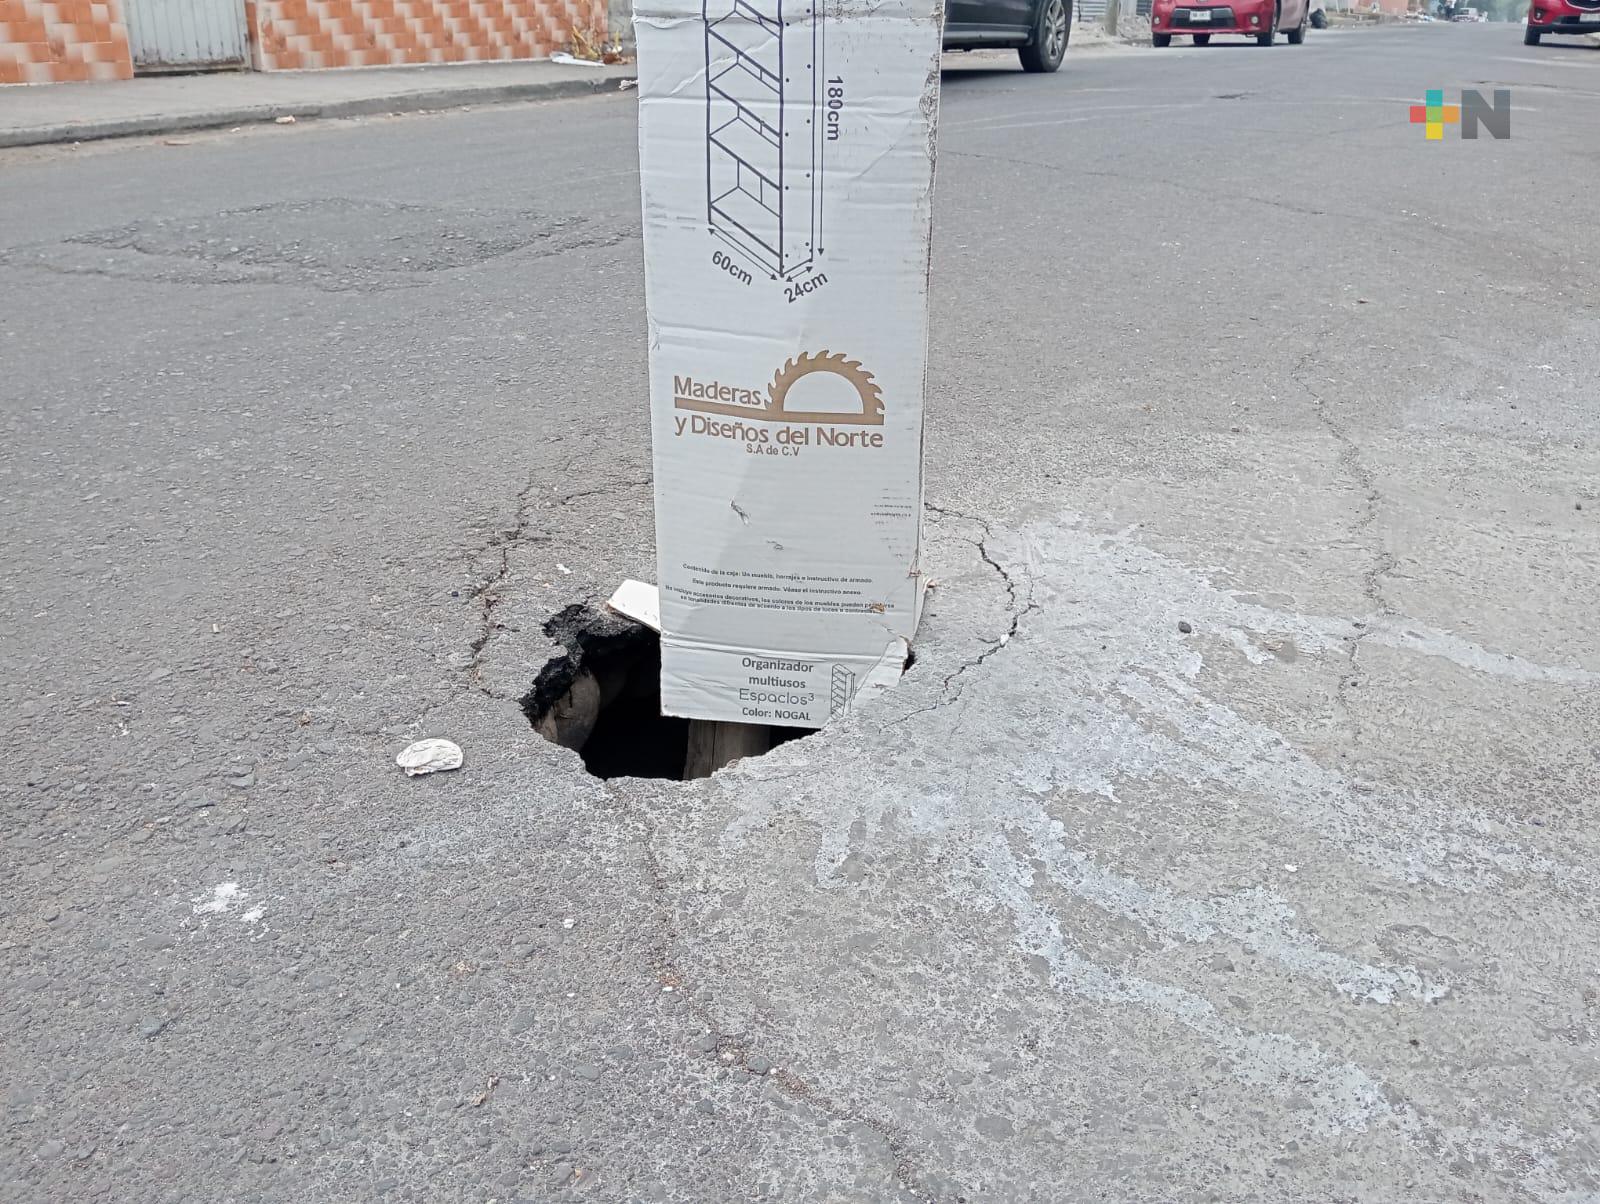 Con un palo señalan hundimiento en calle Yáñez de Veracruz puerto